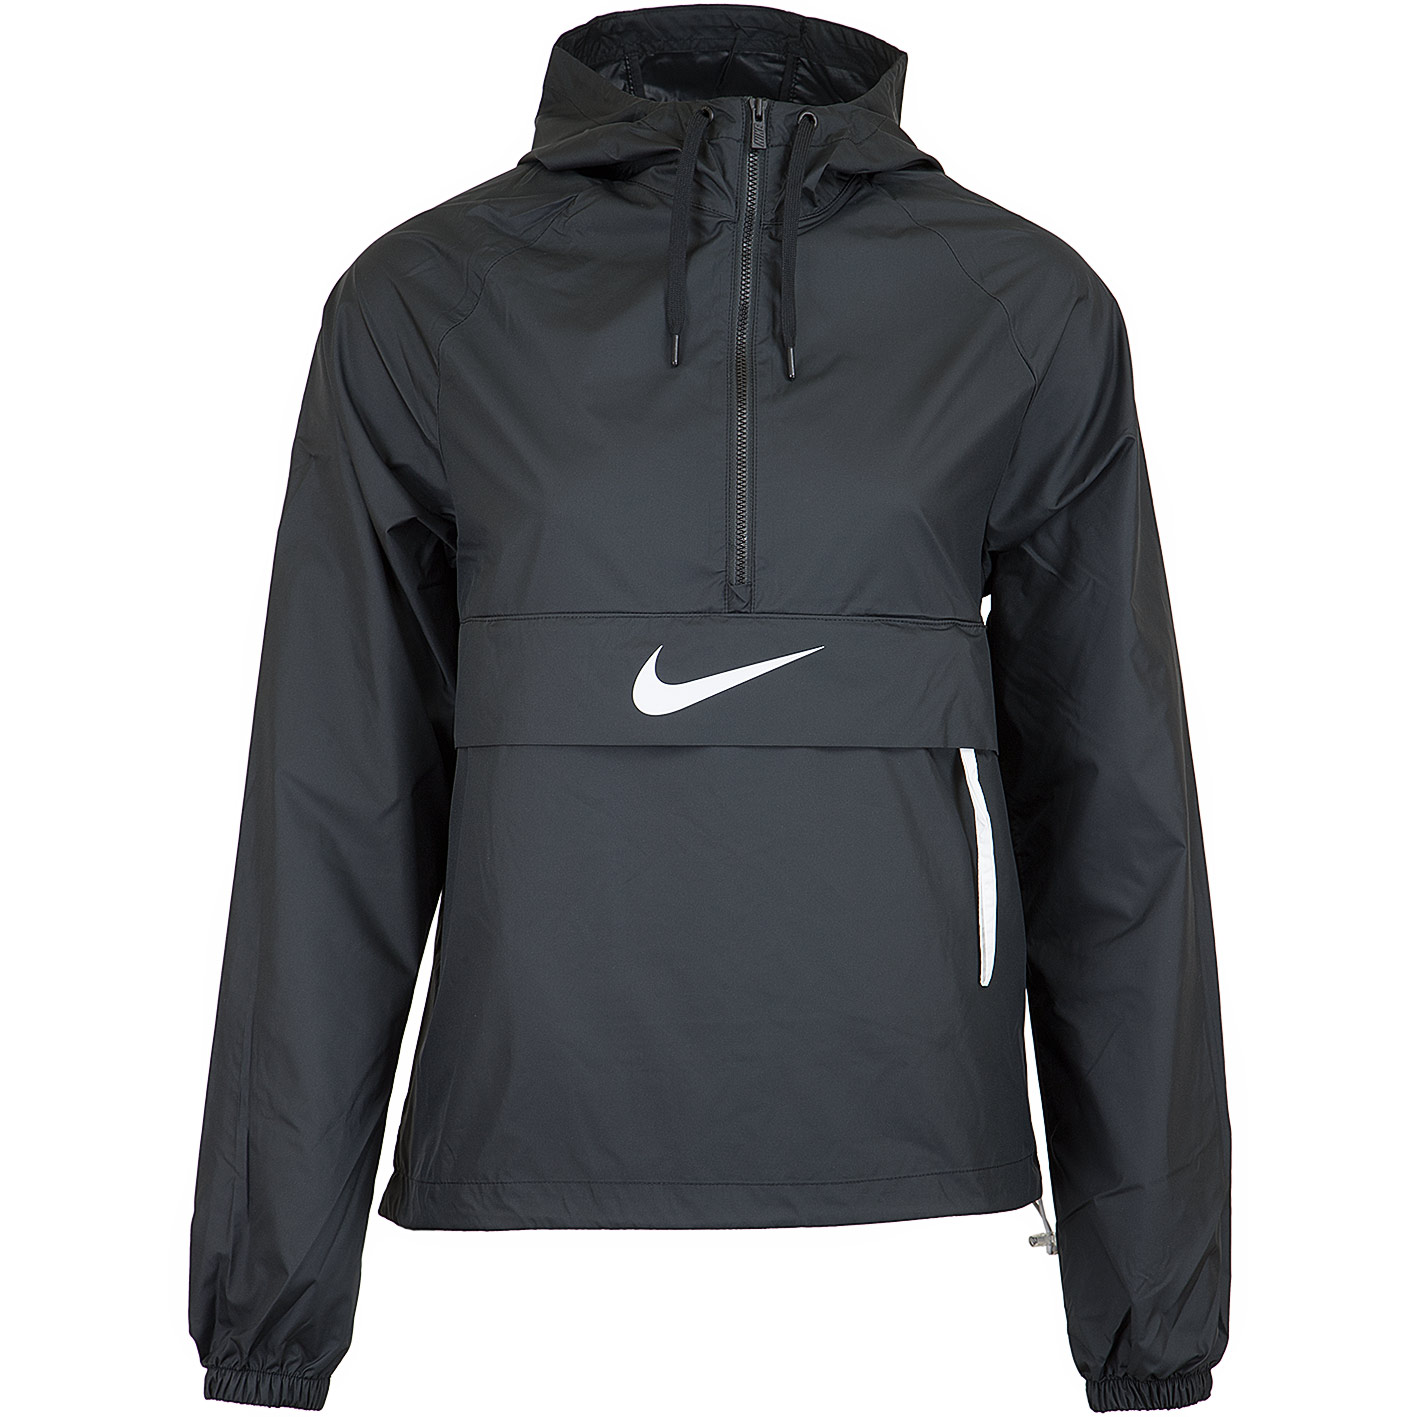 ☆ Nike Damen Windbreaker Swoosh Packable schwarz/weiß - hier bestellen!